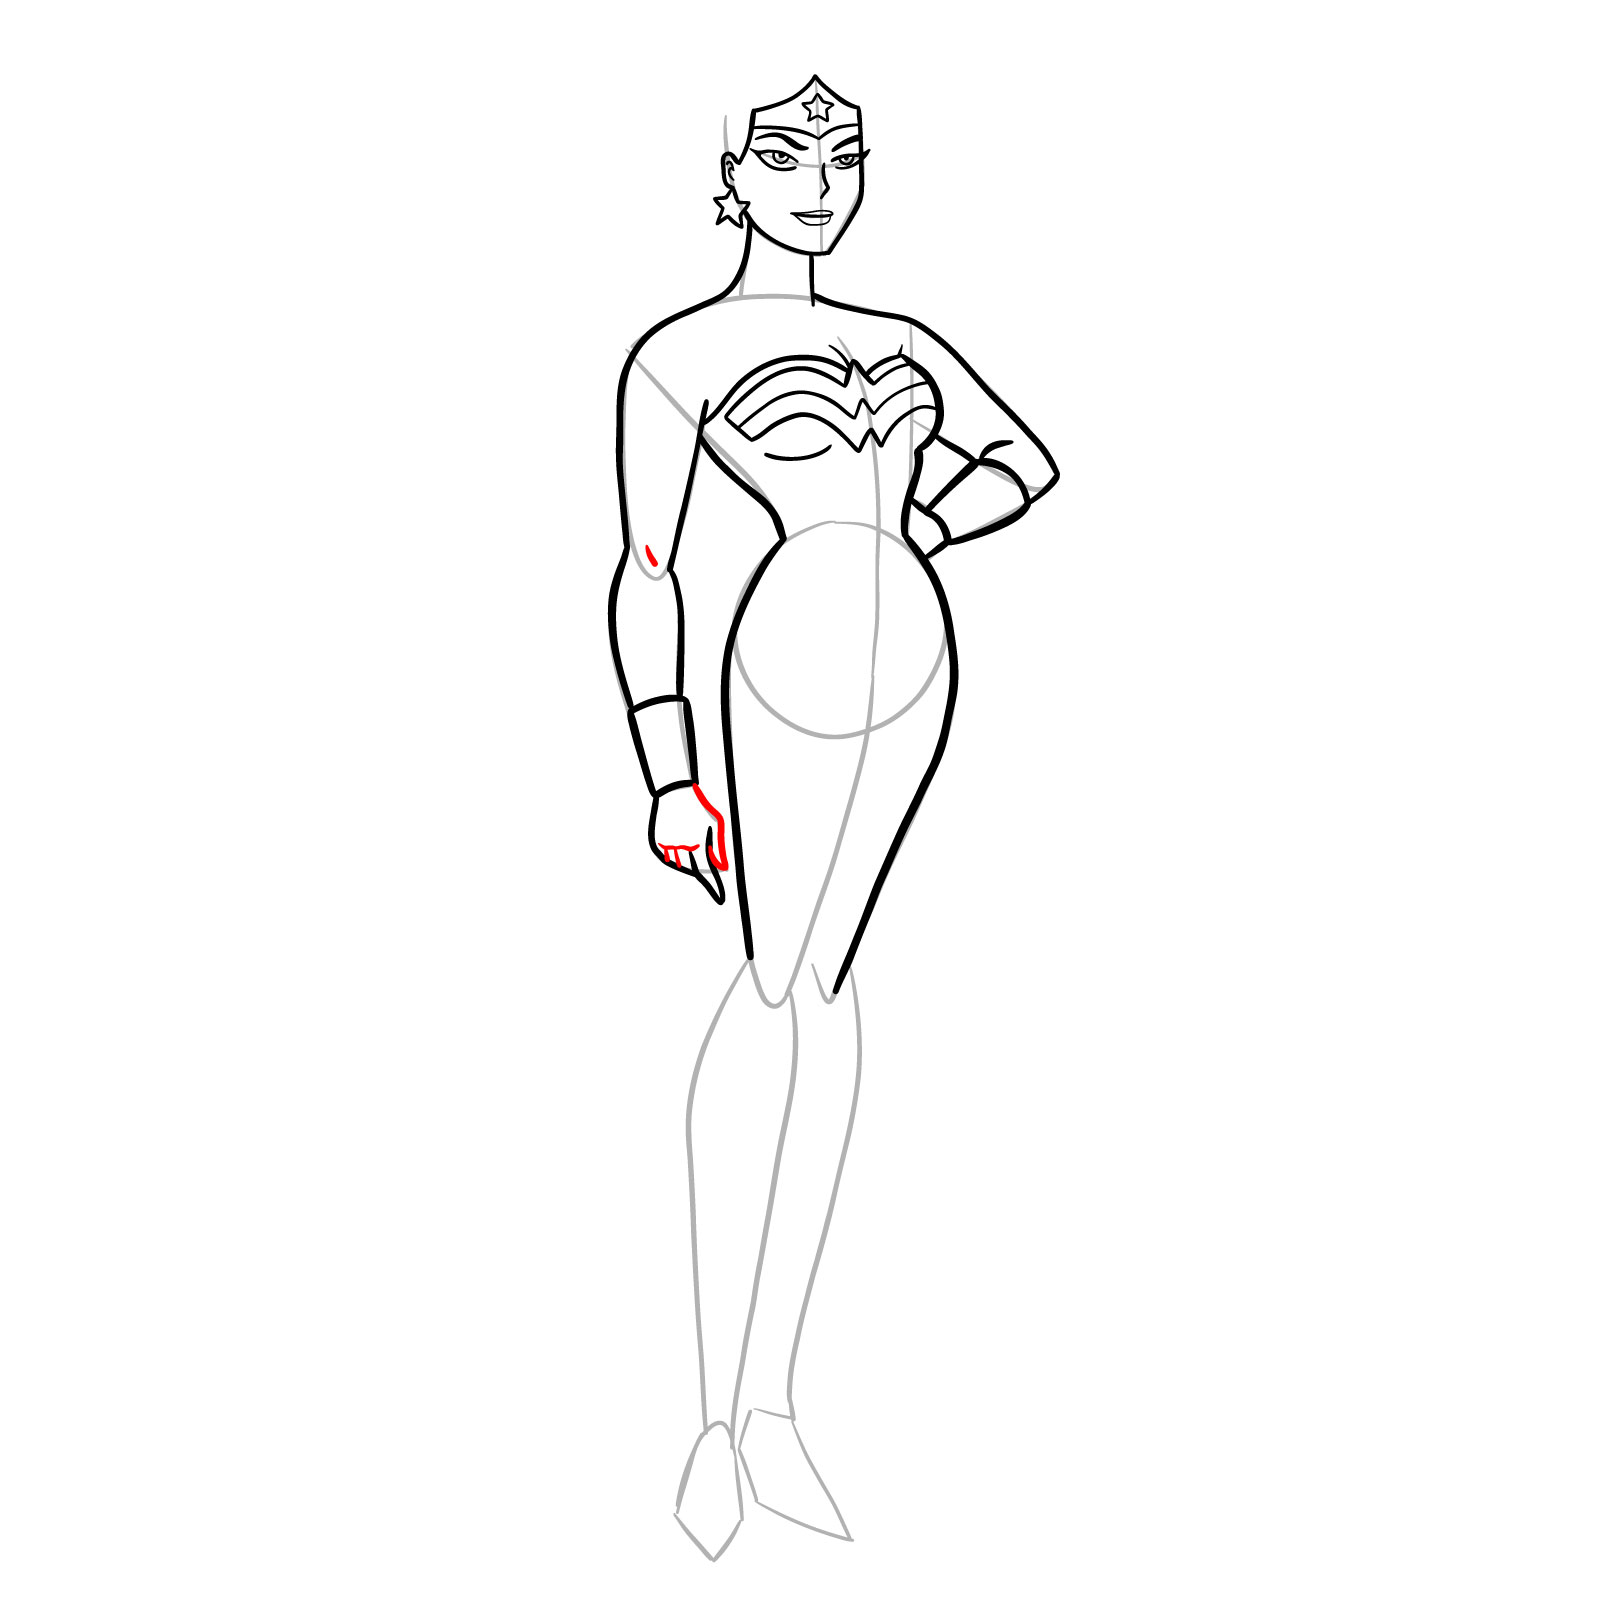 How to draw Wonder Woman cartoon style - step 21